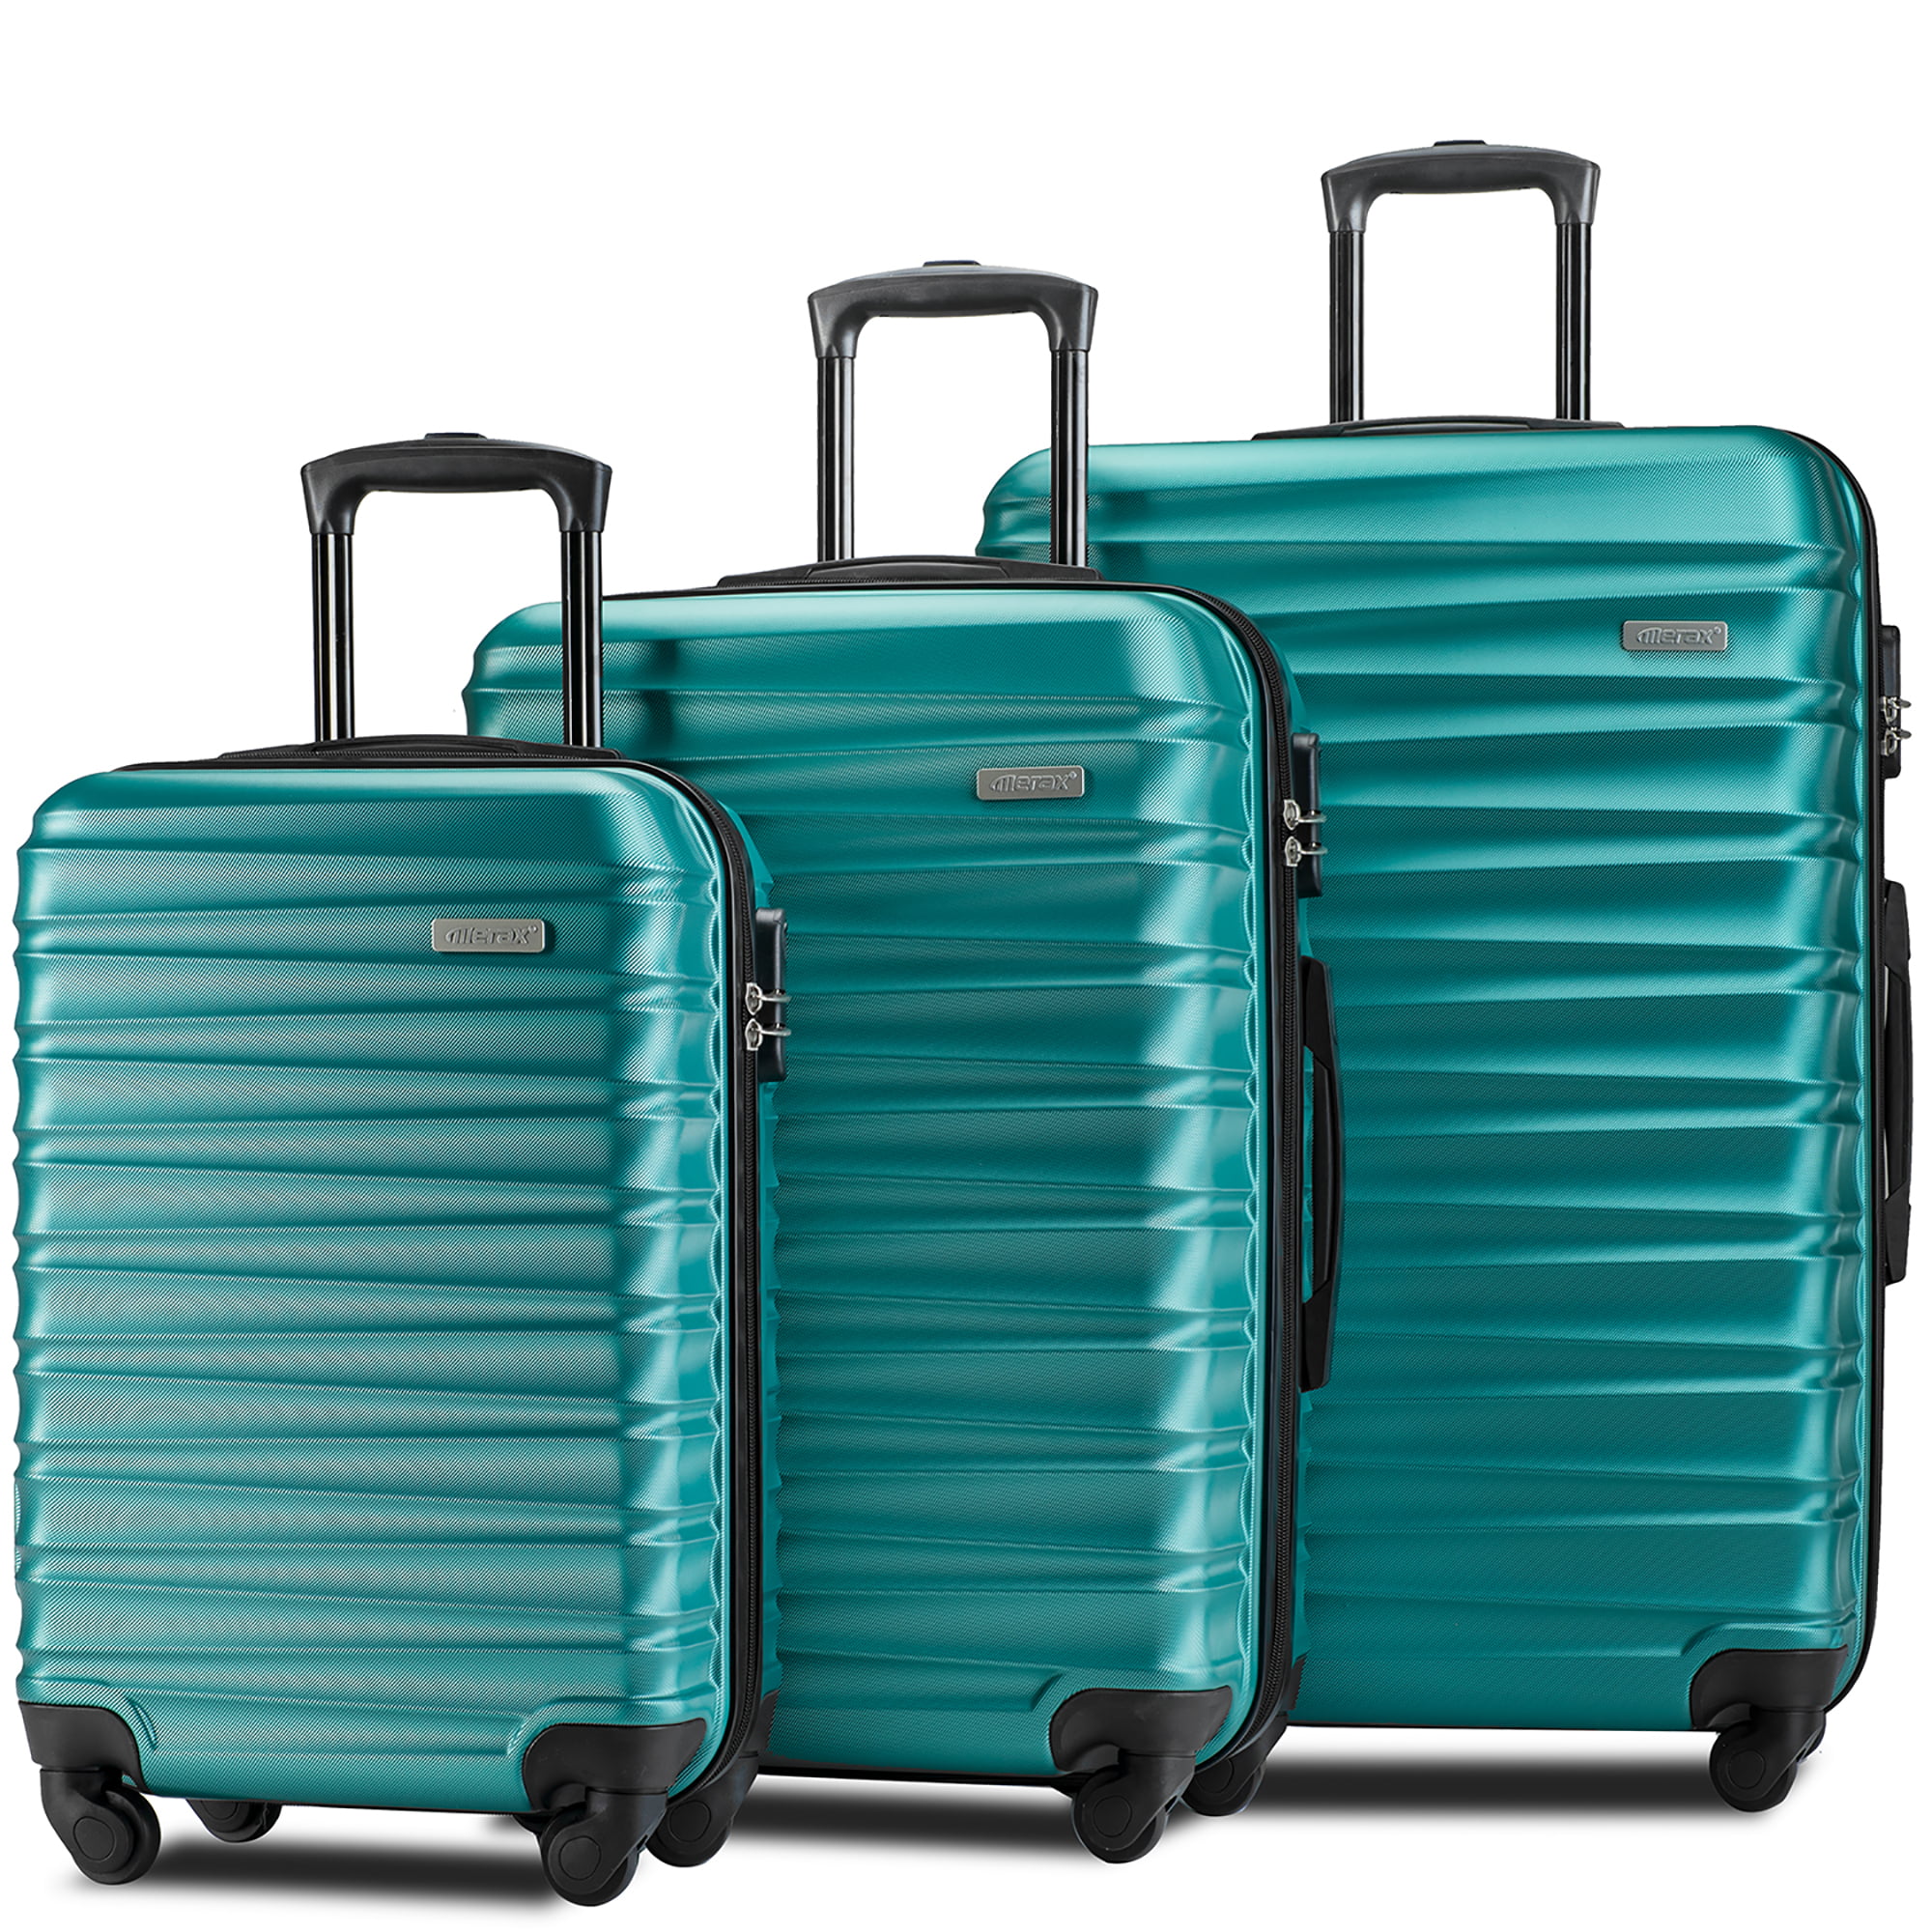 3 piece travel luggage set